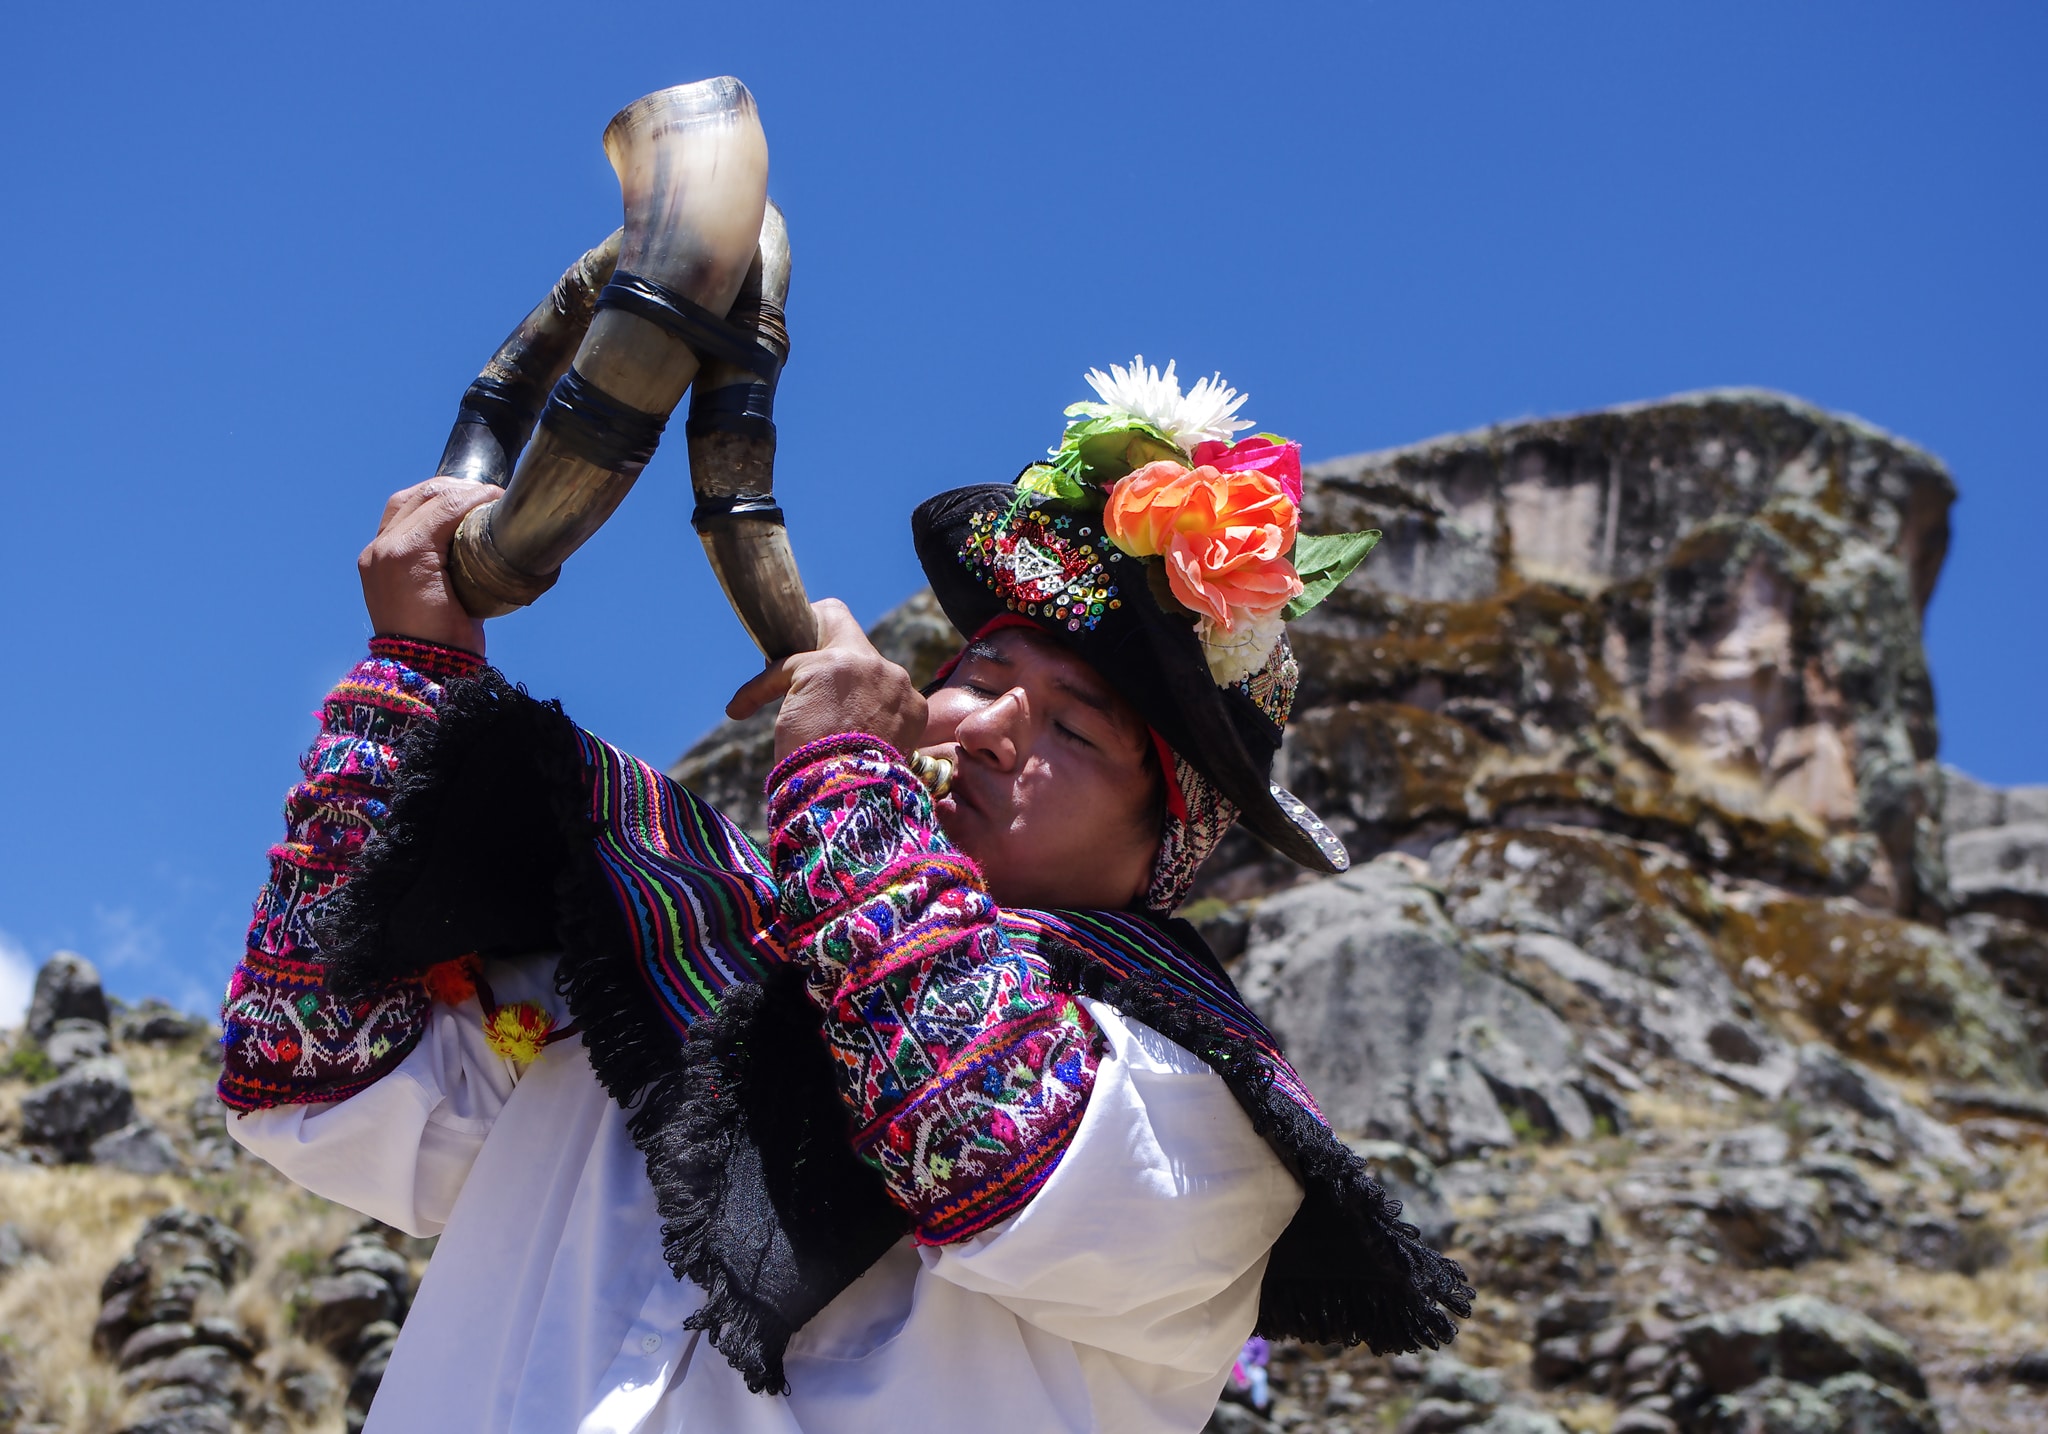 PERU' - Festività nel sito archeologico “Incahuasi de Huaytará”, nel tratto Vilcashuaman – Sangalla, Perù. Courtesy: Jose Luis Matos. Proyecto Qhapaq Ñan – Sede Nacional. Ministerio de Cultura de Perú. 